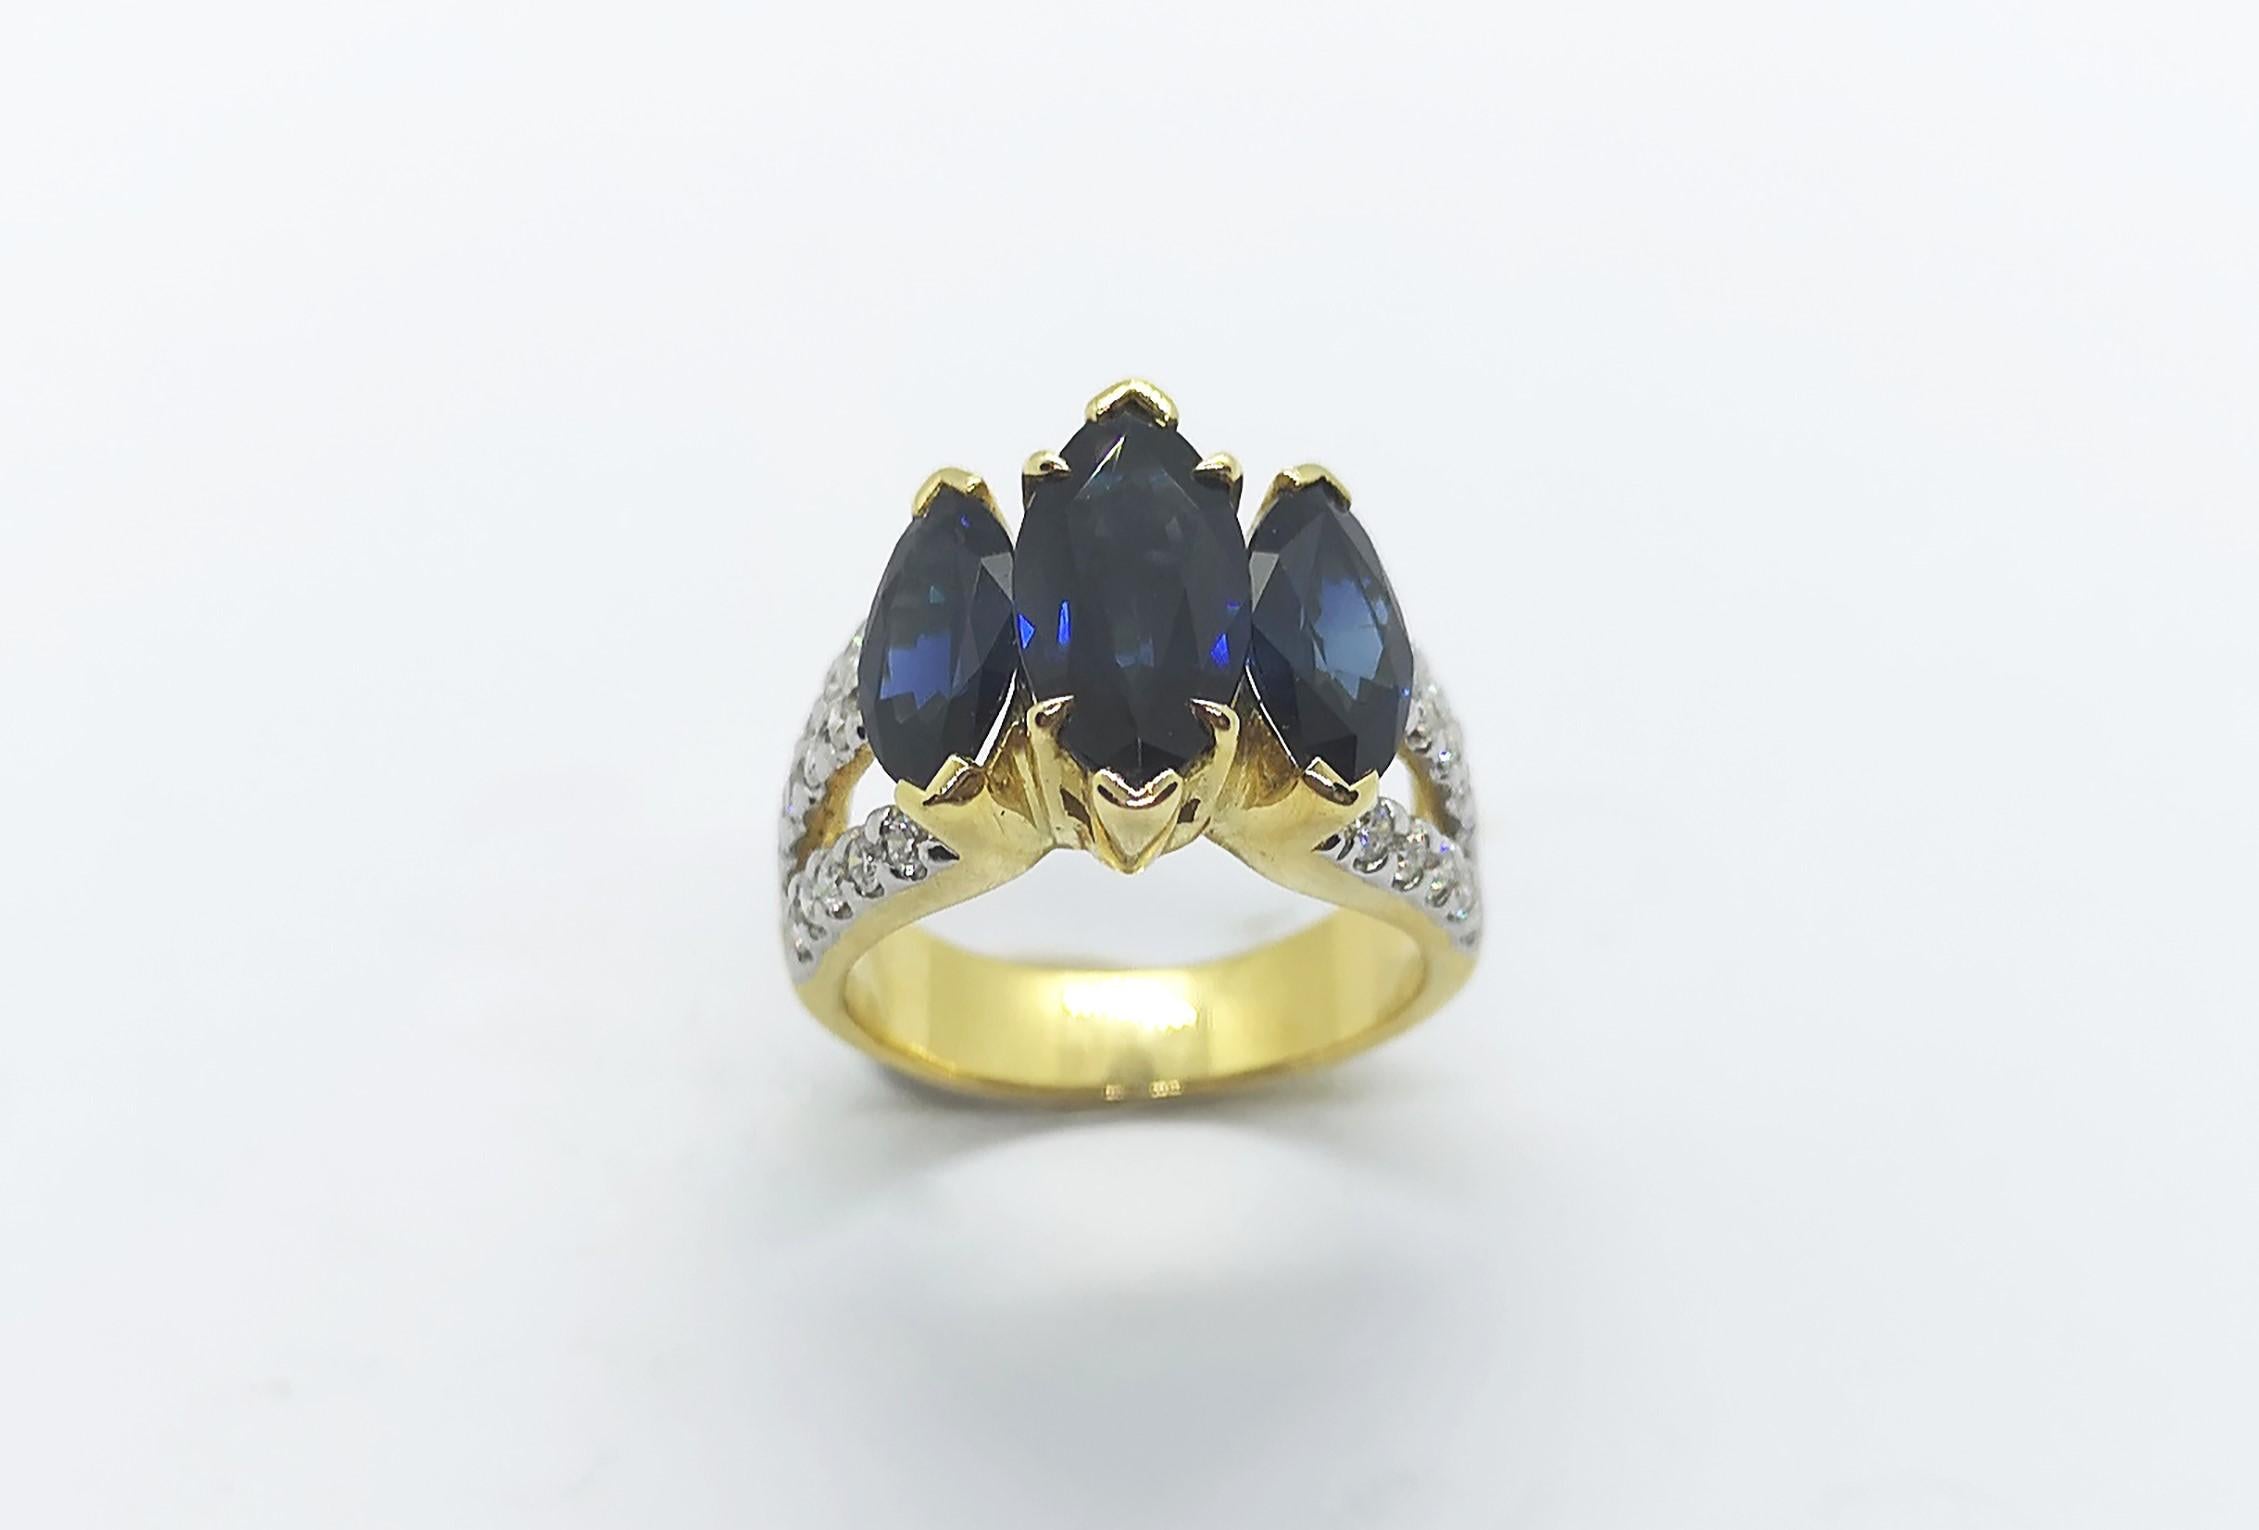 Blue Sapphire 4.16 carats with Diamond 0.53 carat Ring set in 18 Karat Gold Settings

Width: 1.5 cm
Length: 1.4 cm 
Ring Size: 50

